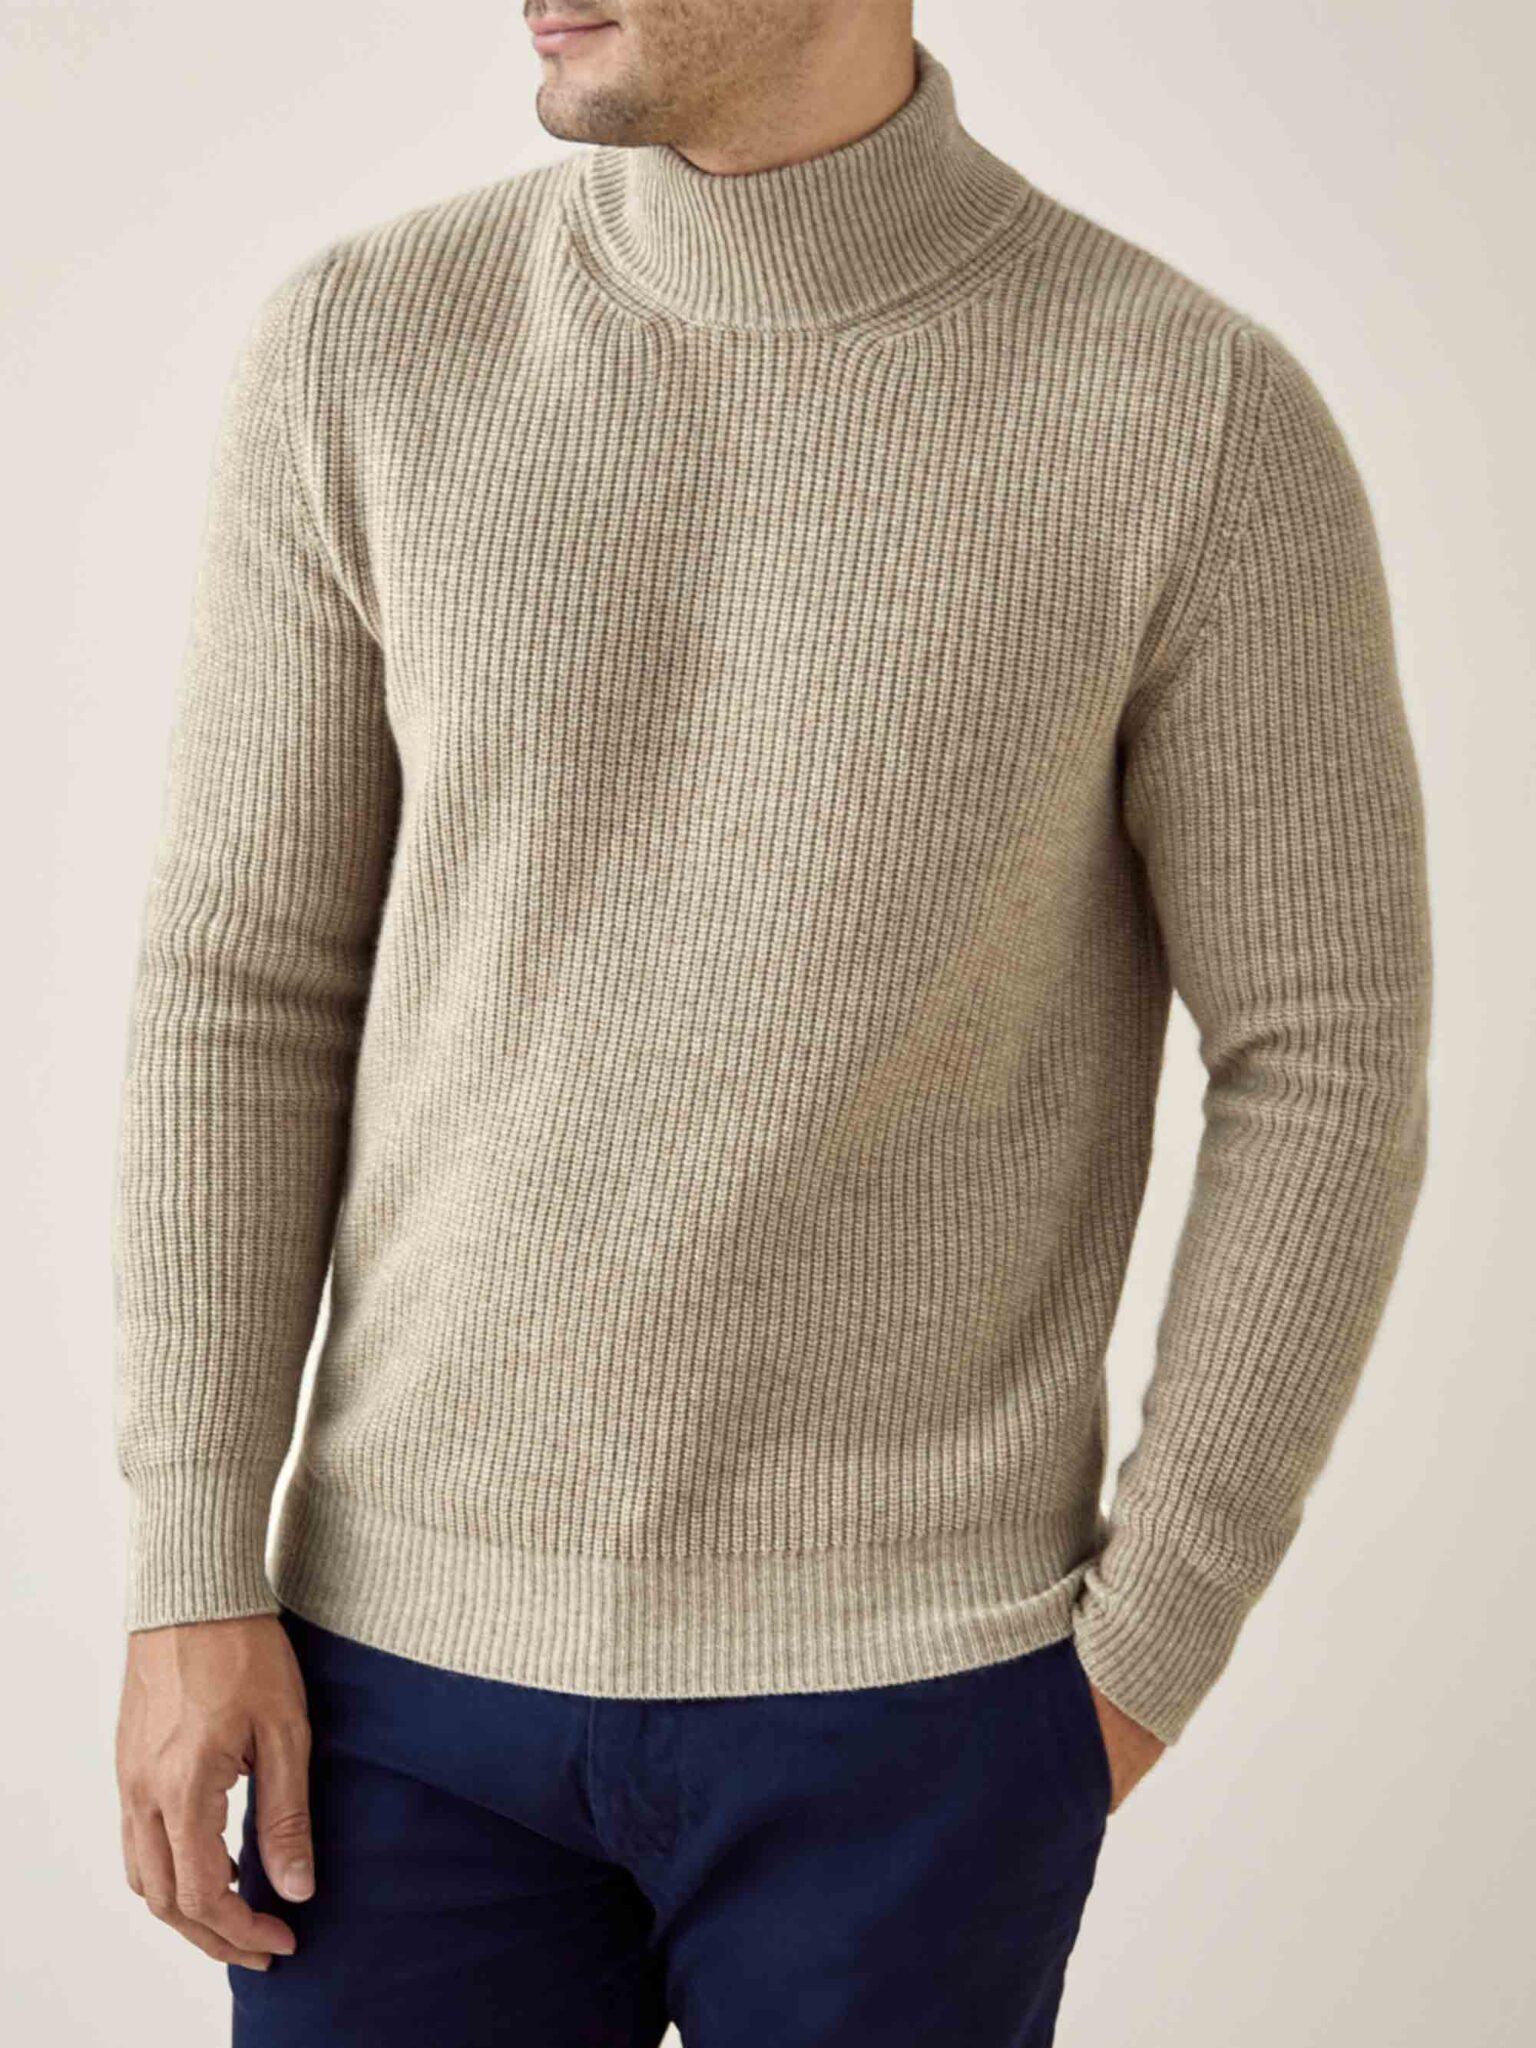 Knittons Men's Turtleneck Sweater_1